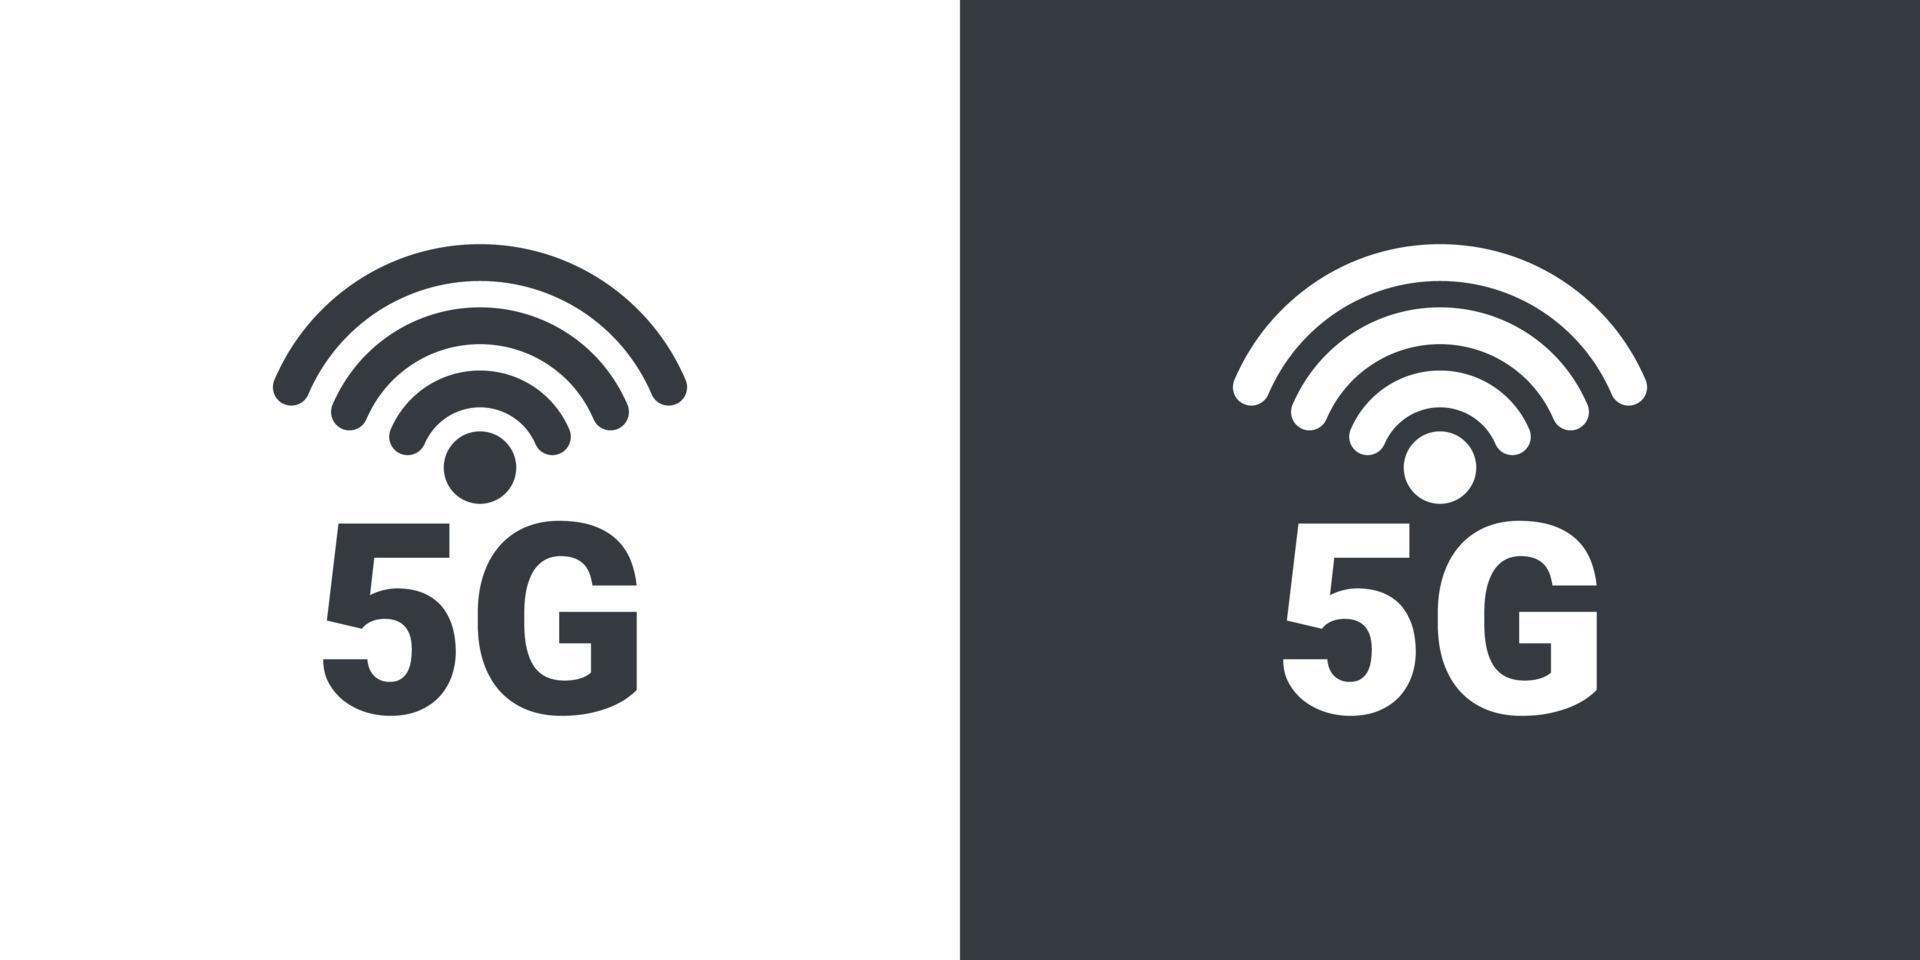 5g symbool. hoog snelheid internet pictogrammen. 5g signaal pictogrammen. vector illustratie